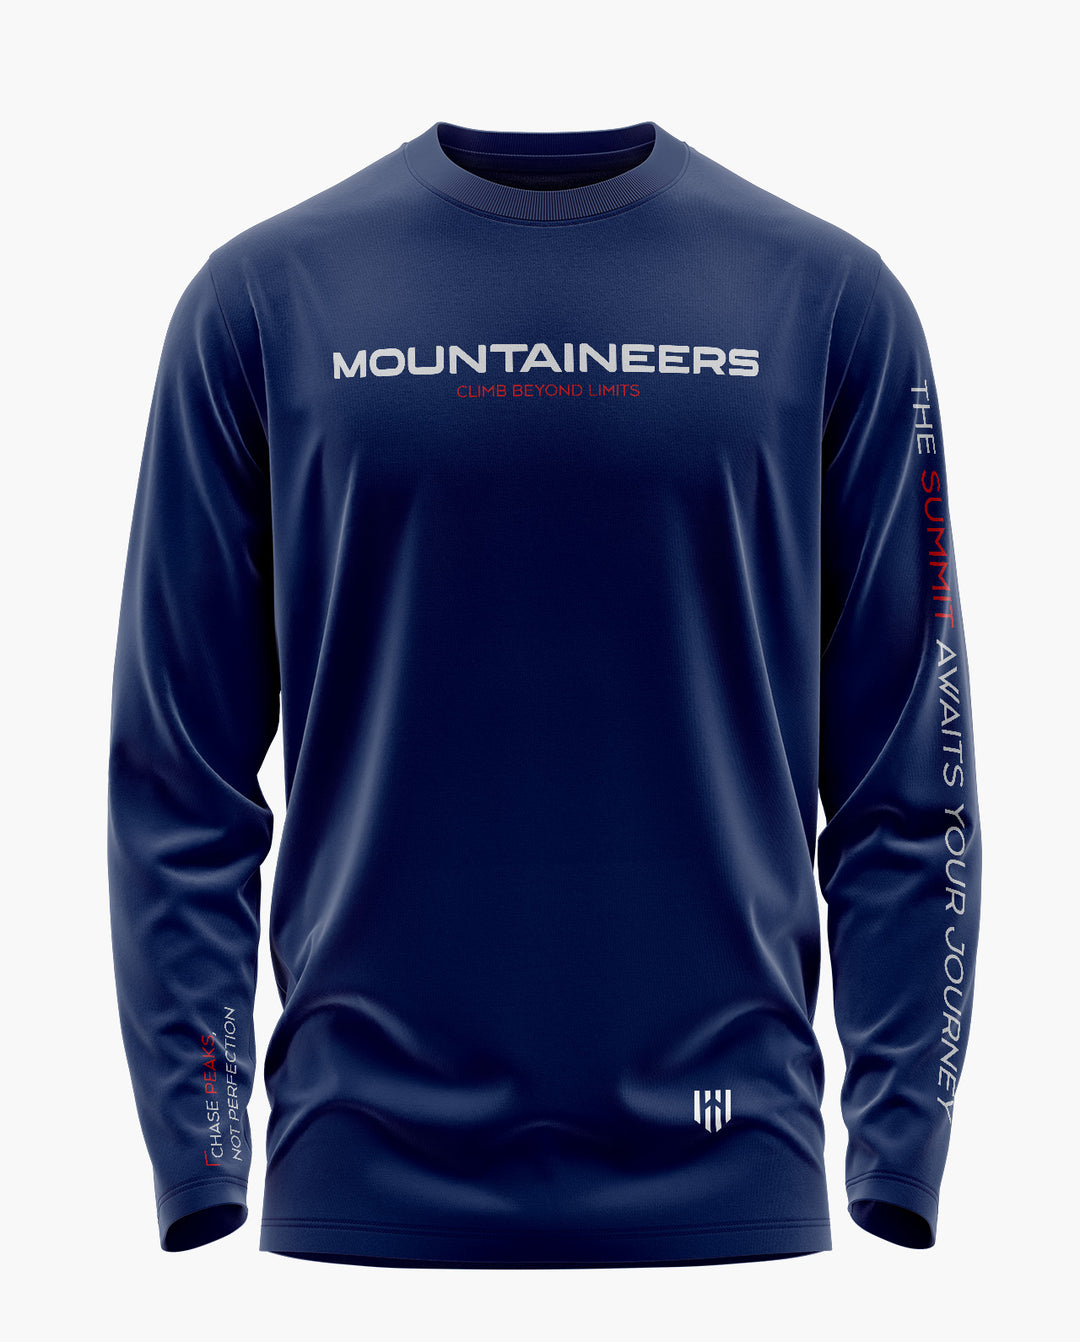 Mountaineers Full Sleeve T-Shirt